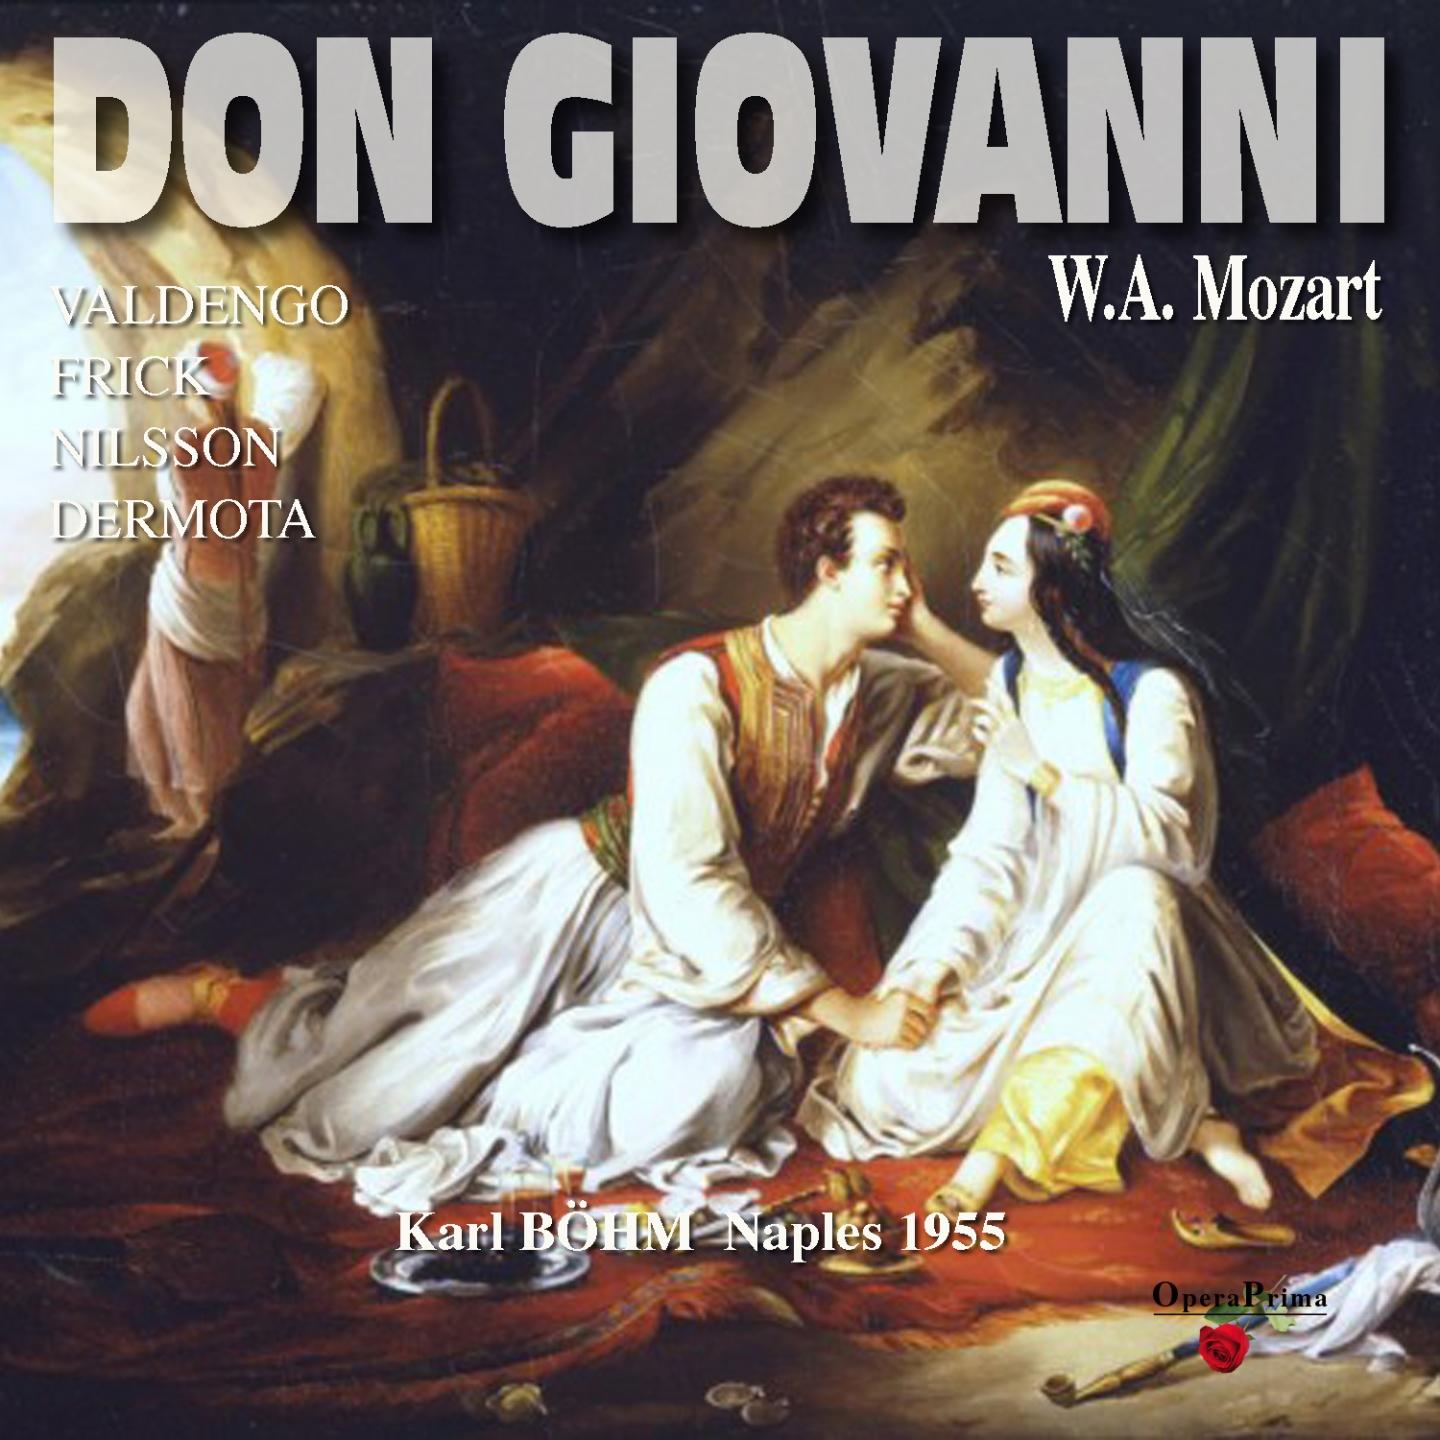 Don Giovanni: Act II - "Non mi dir, bell'idol mio"